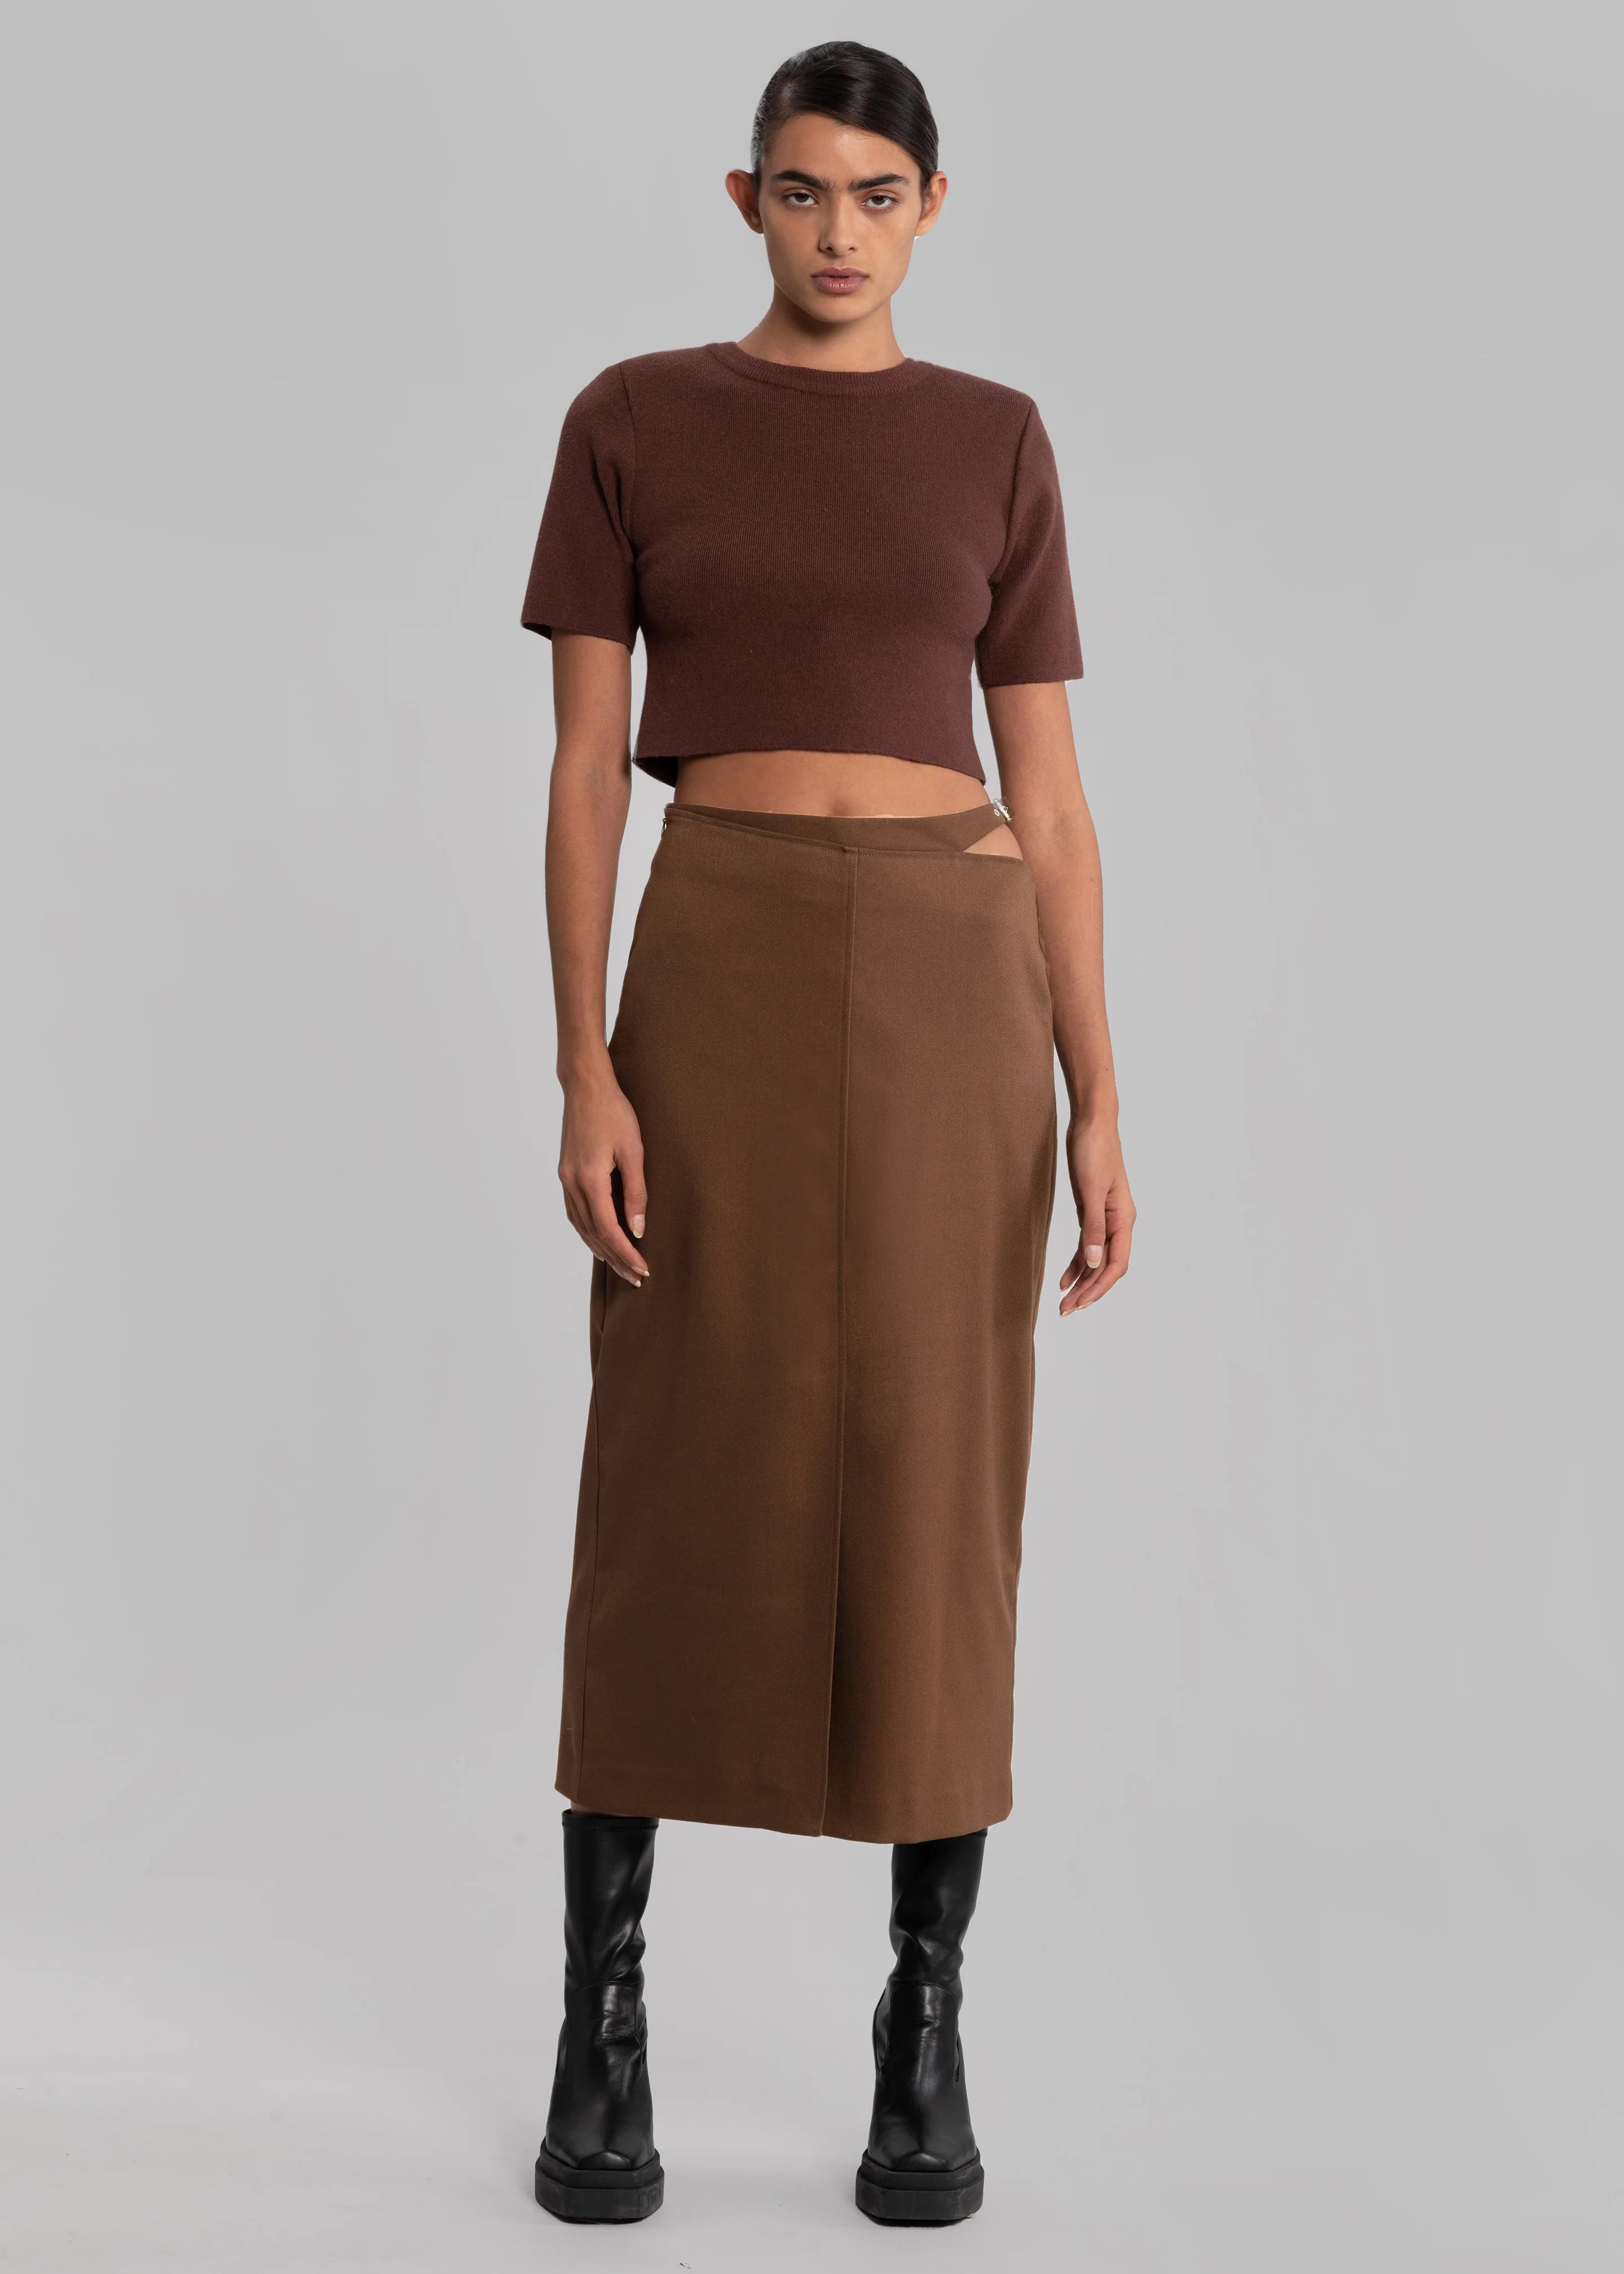 Stacia Cut Out Midi Skirt - Brown - 1